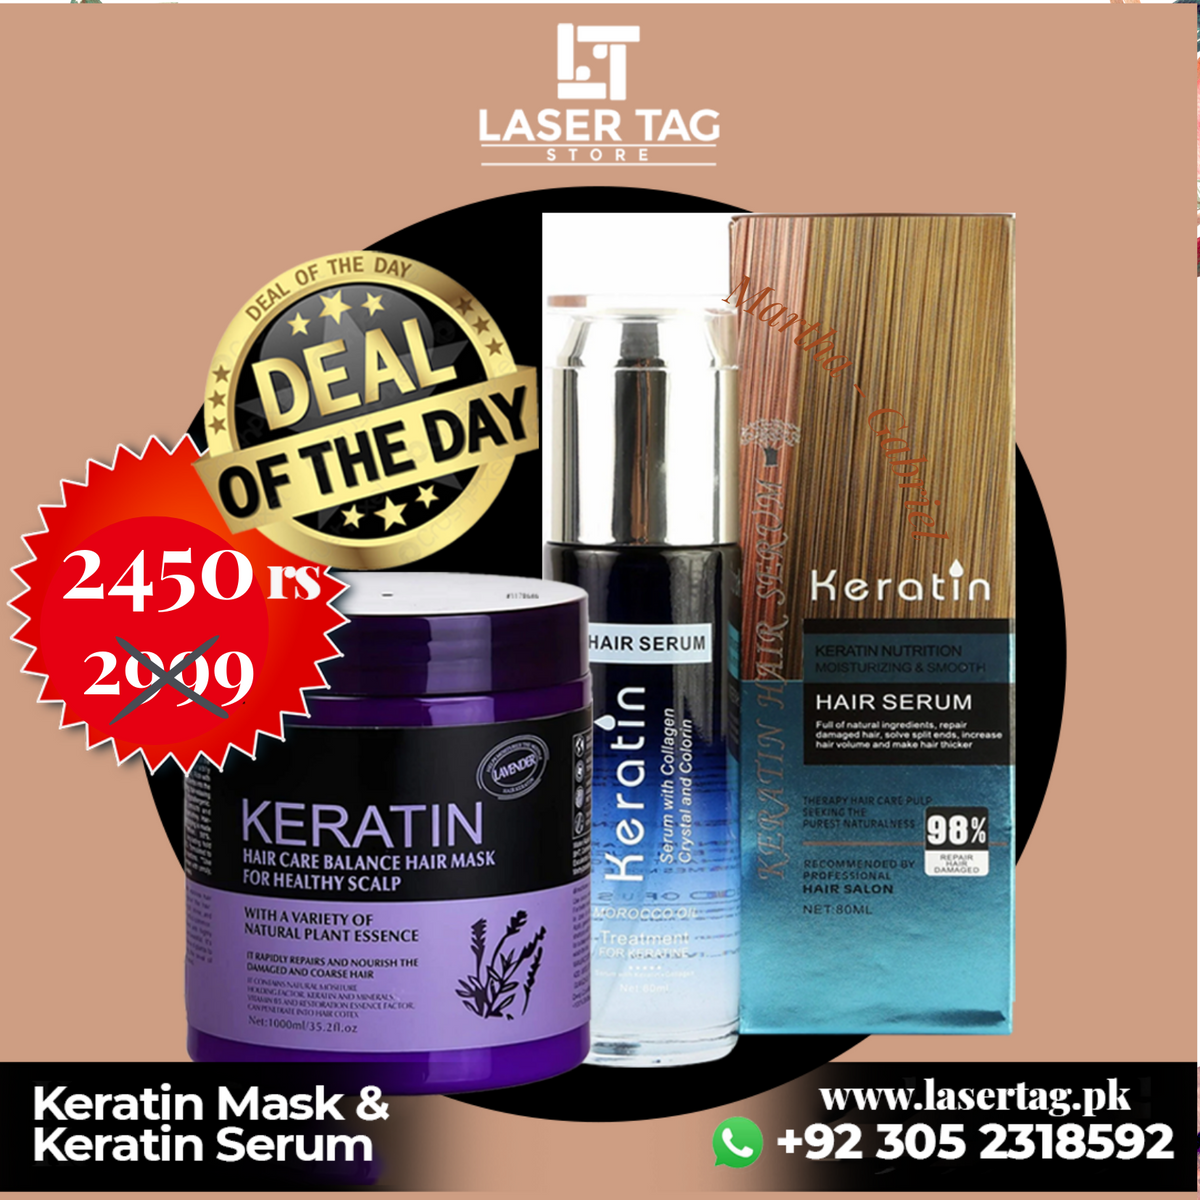 Deal 05 : Keratin mask + keratin serum